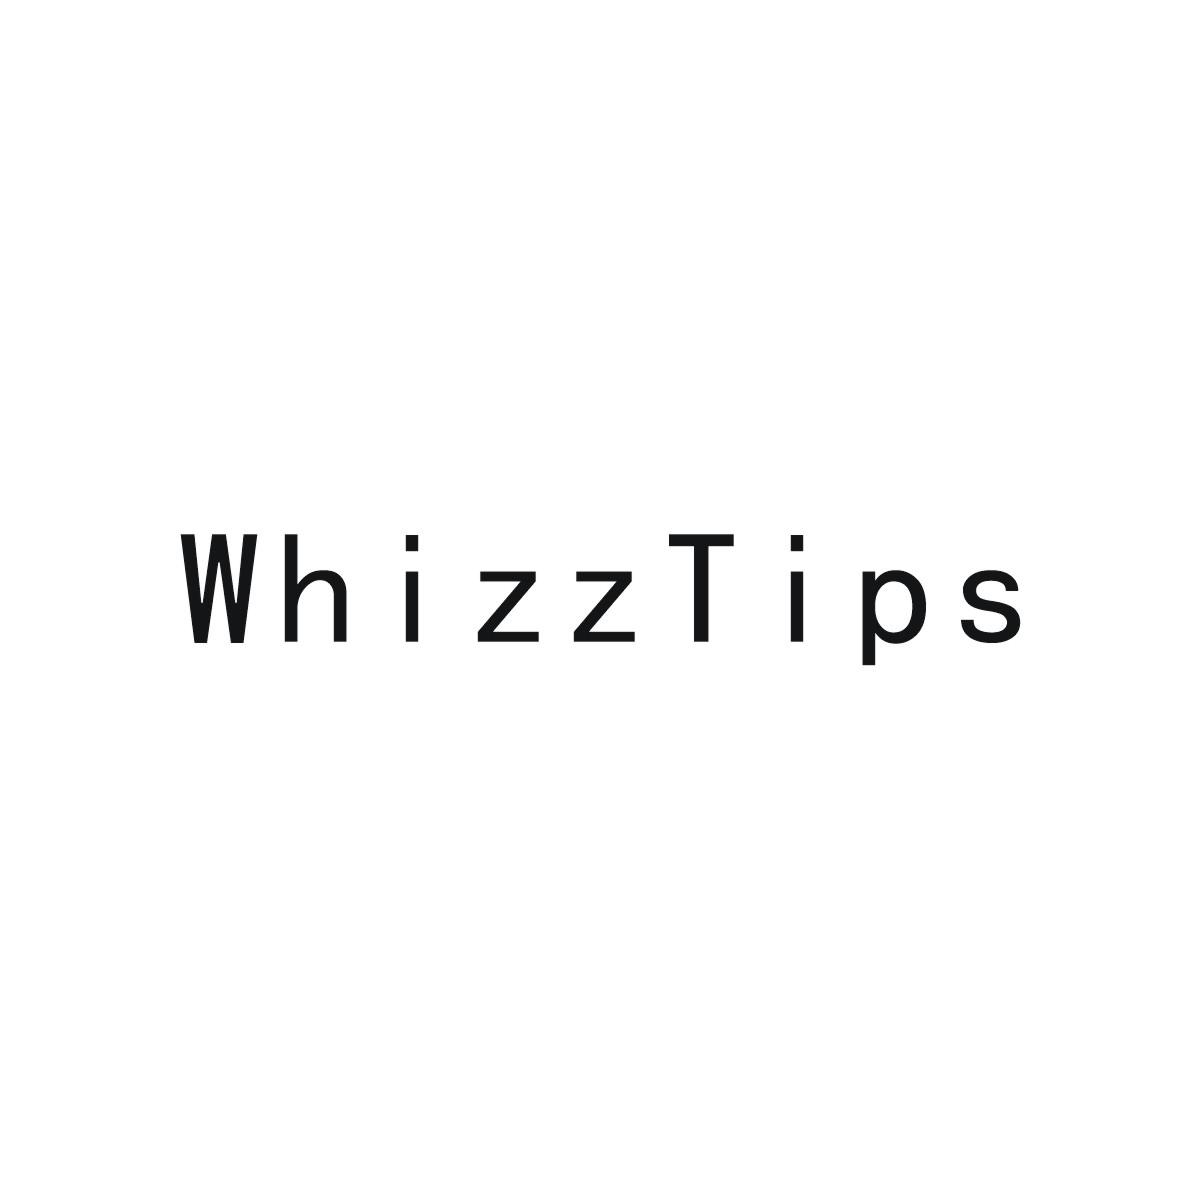 WHIZZTIPS晚礼服商标转让费用买卖交易流程